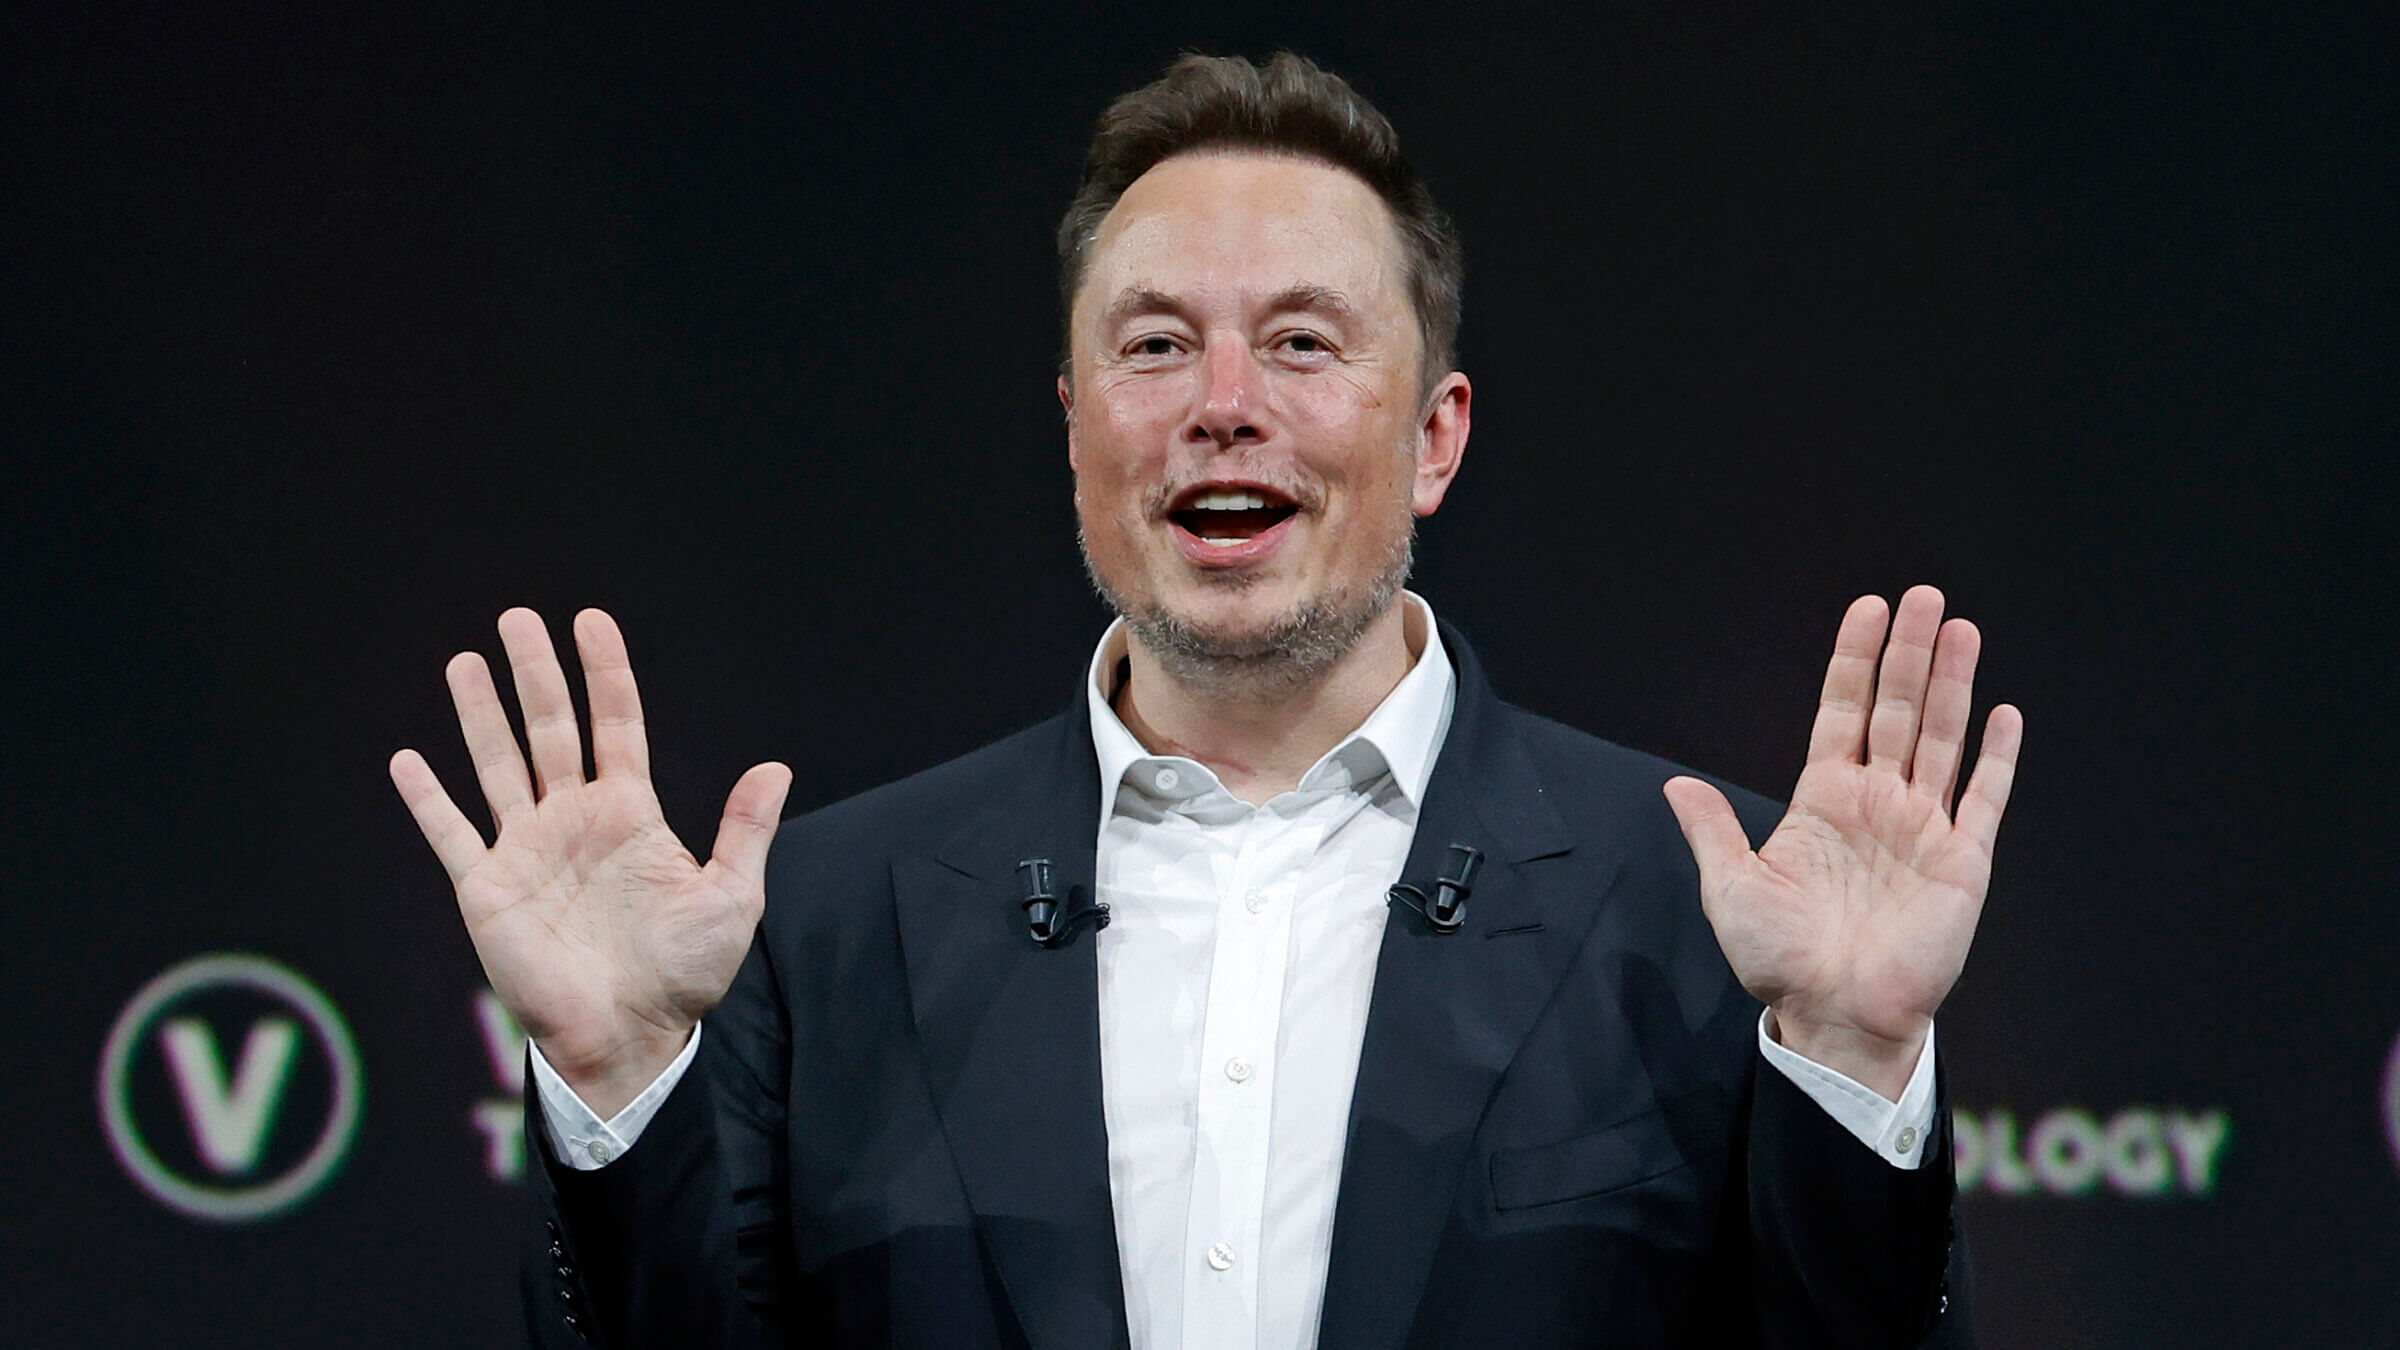 Elon Musk, CEO of Tesla and X.